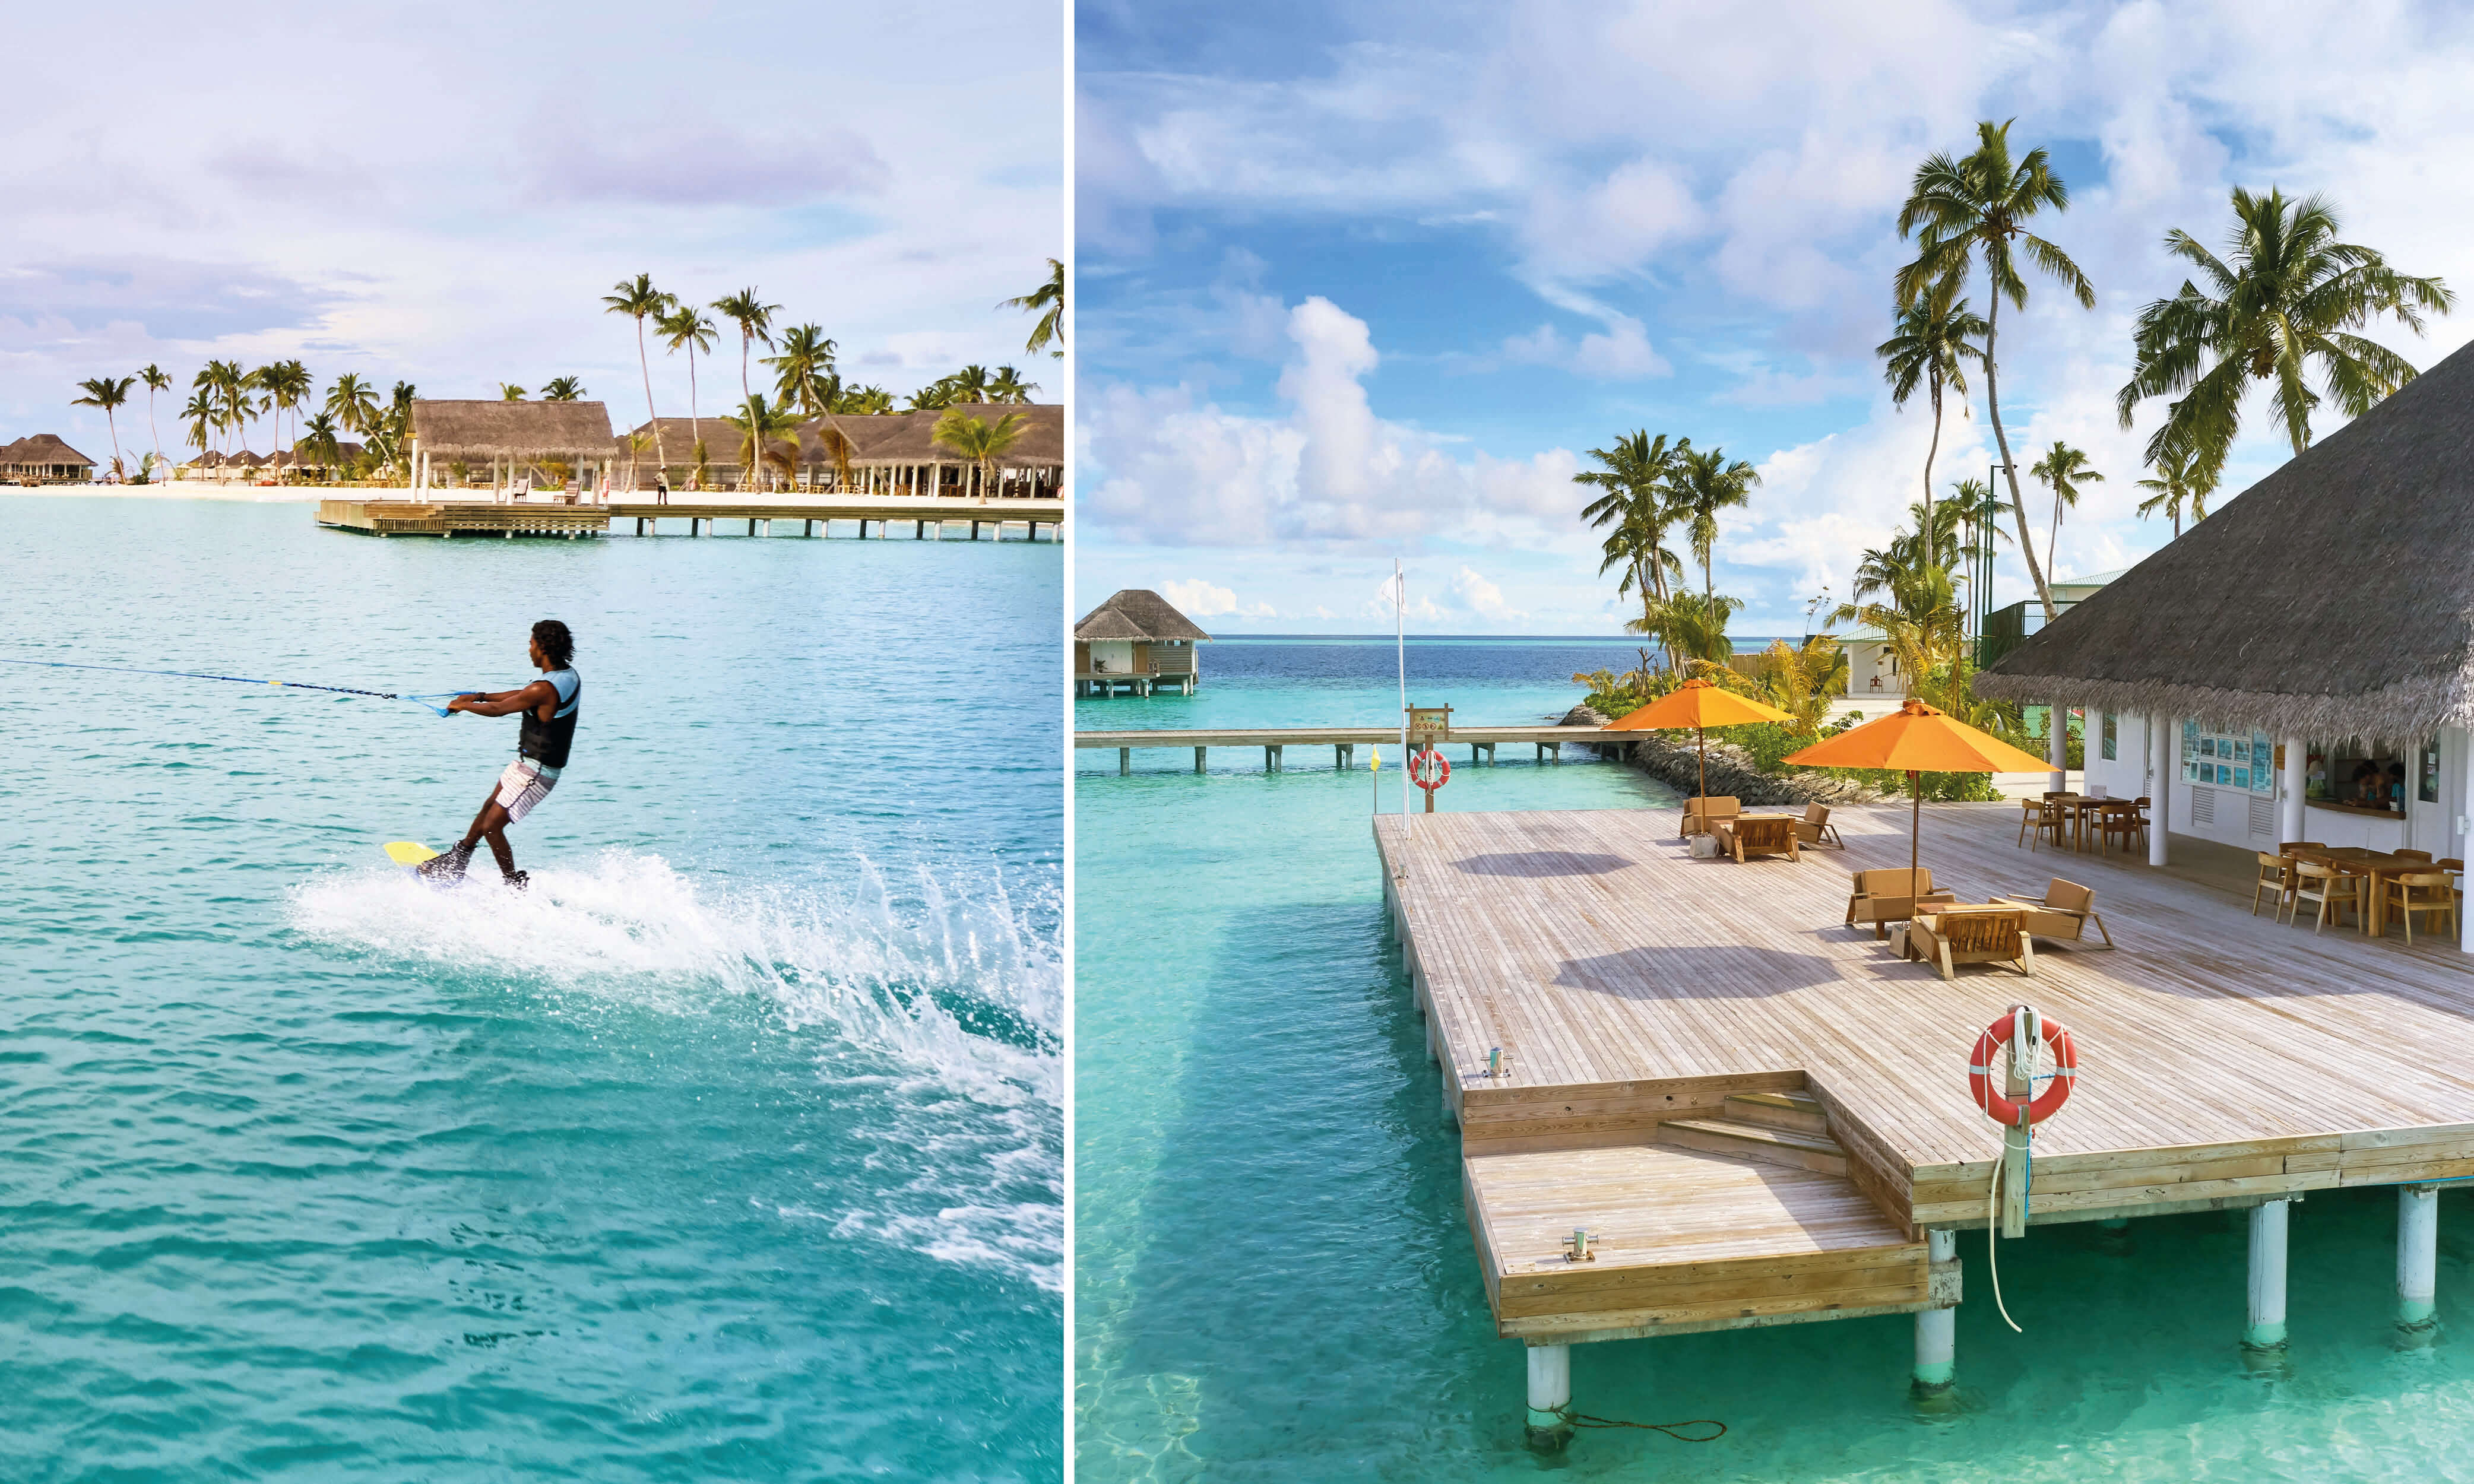 Maldives holiday offer